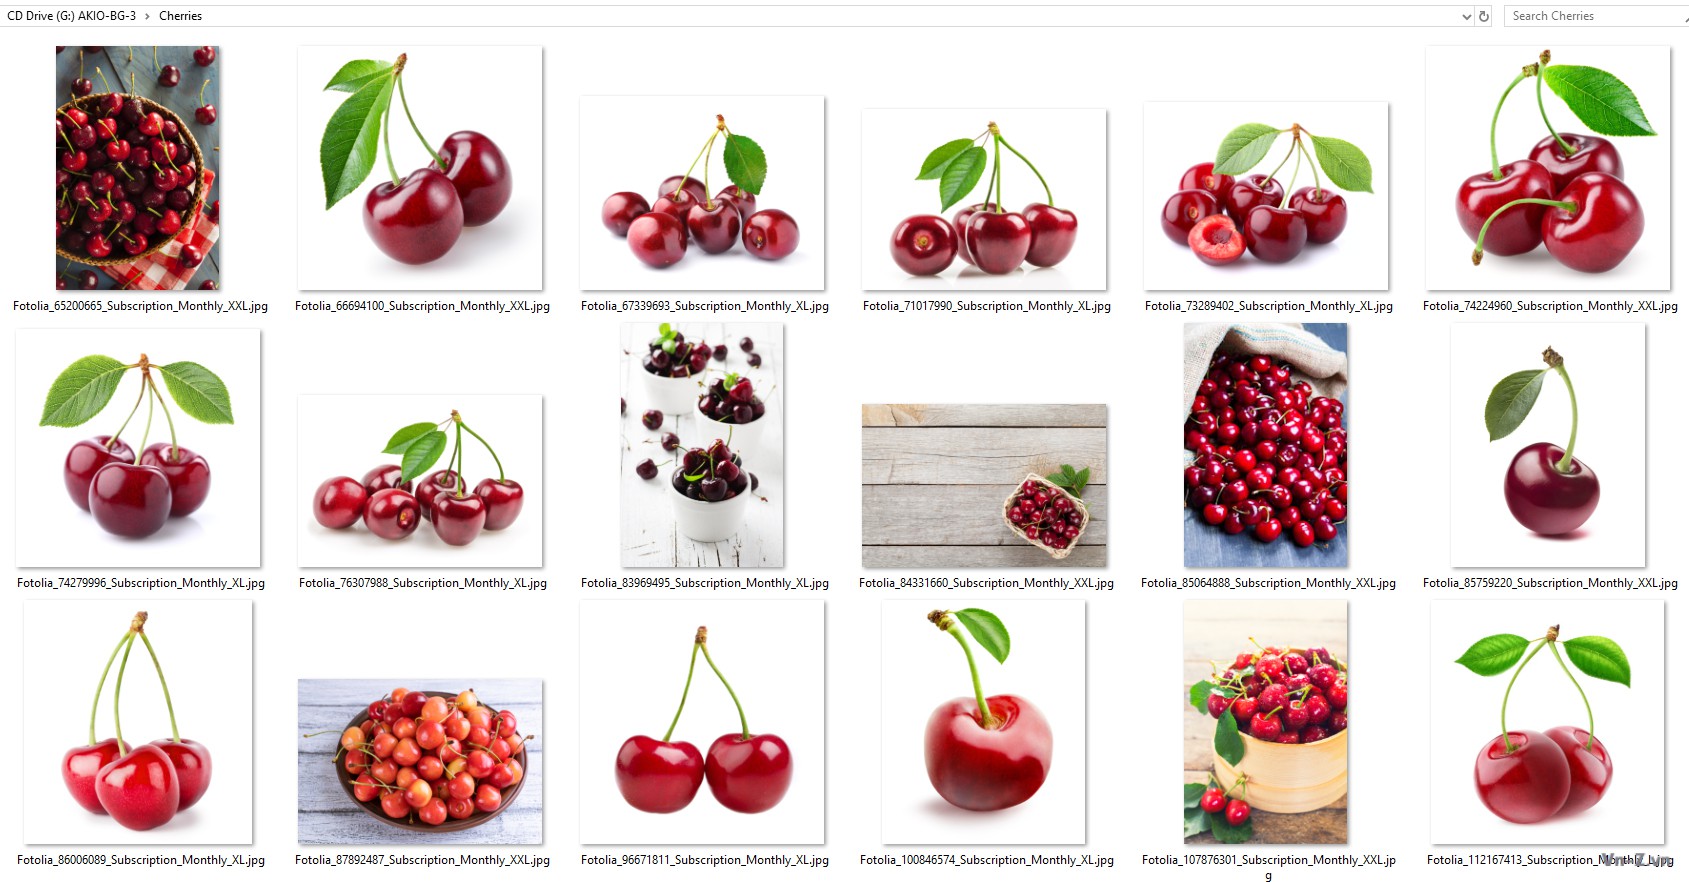 048-Cherries.jpg